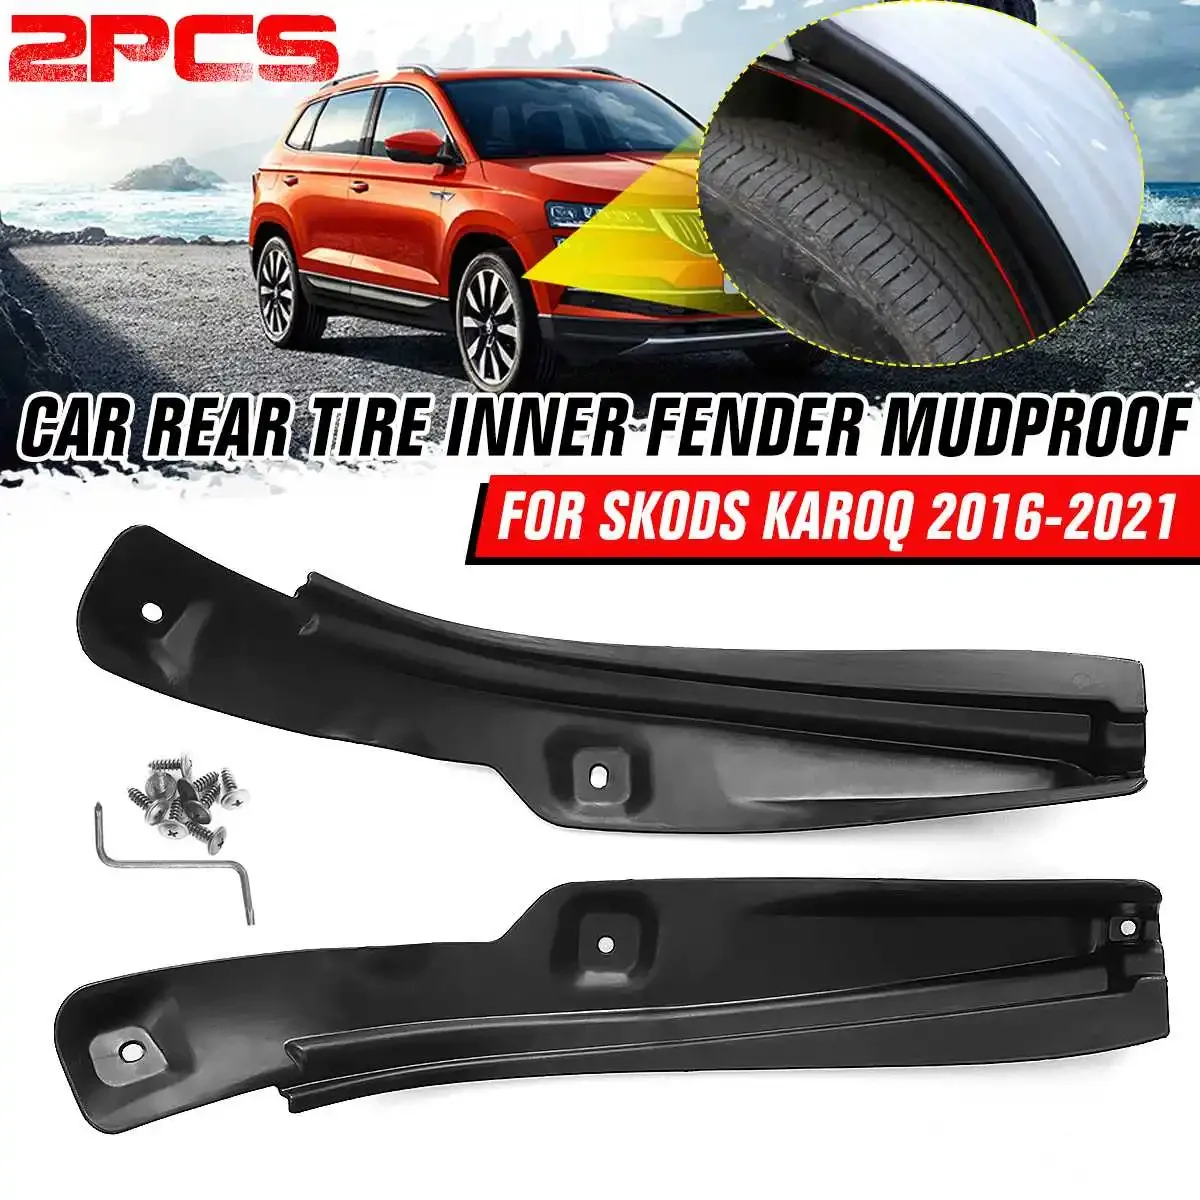 

2Pcs Car Rear Tire Inner Fender Mudproof For Skoda Karoq 2016-2021 Mudguard Anti Dirt Cover Accessories Front Mat Modification